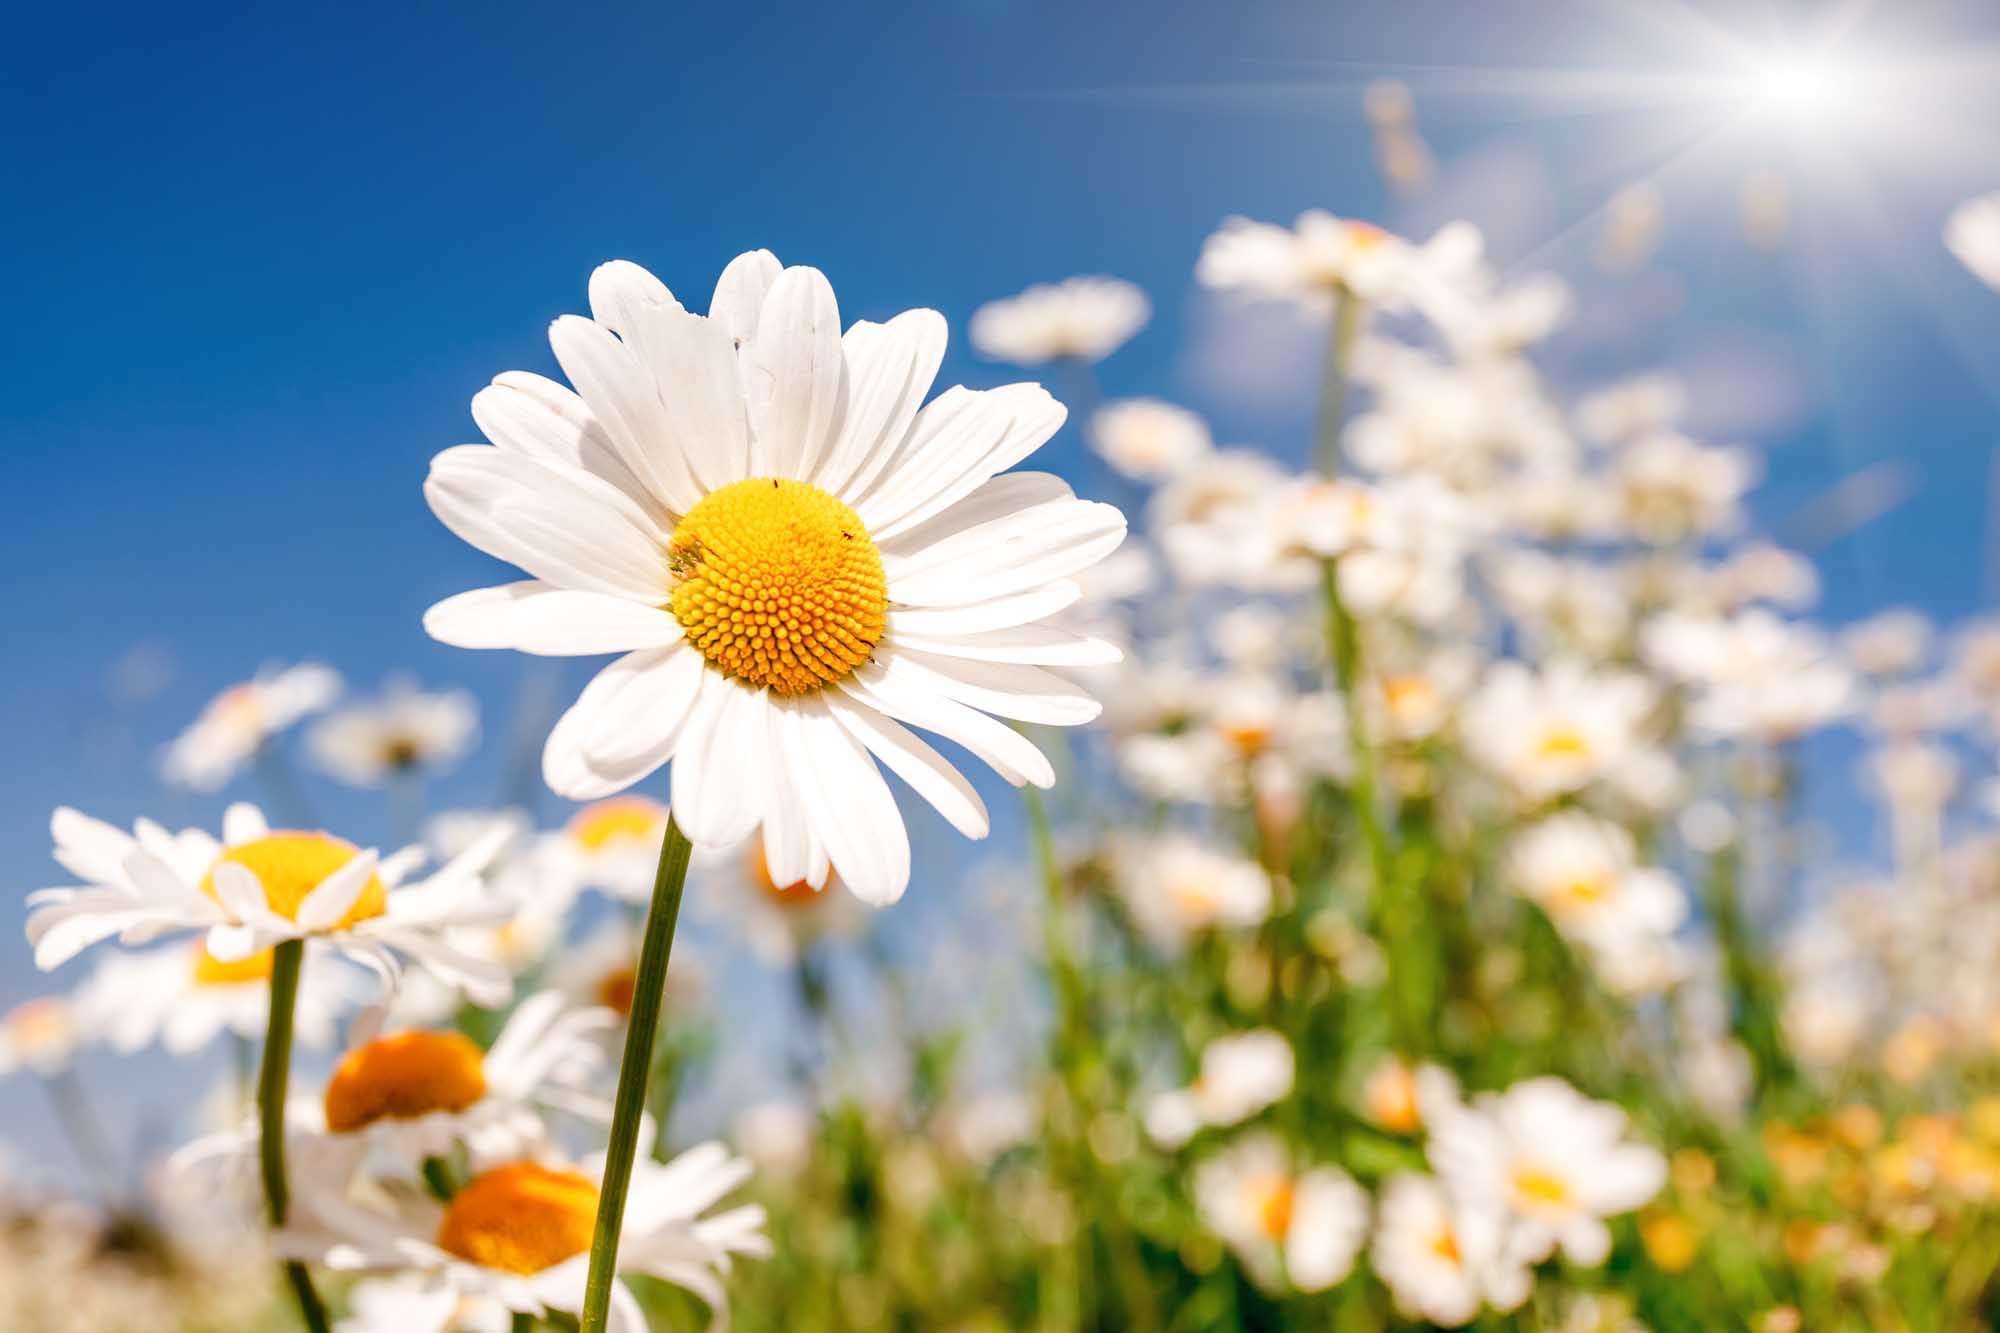 Shasta Daisies: How to Plant, Grow, and Care for Daisy Flowers | The Old Farmer's Almanac